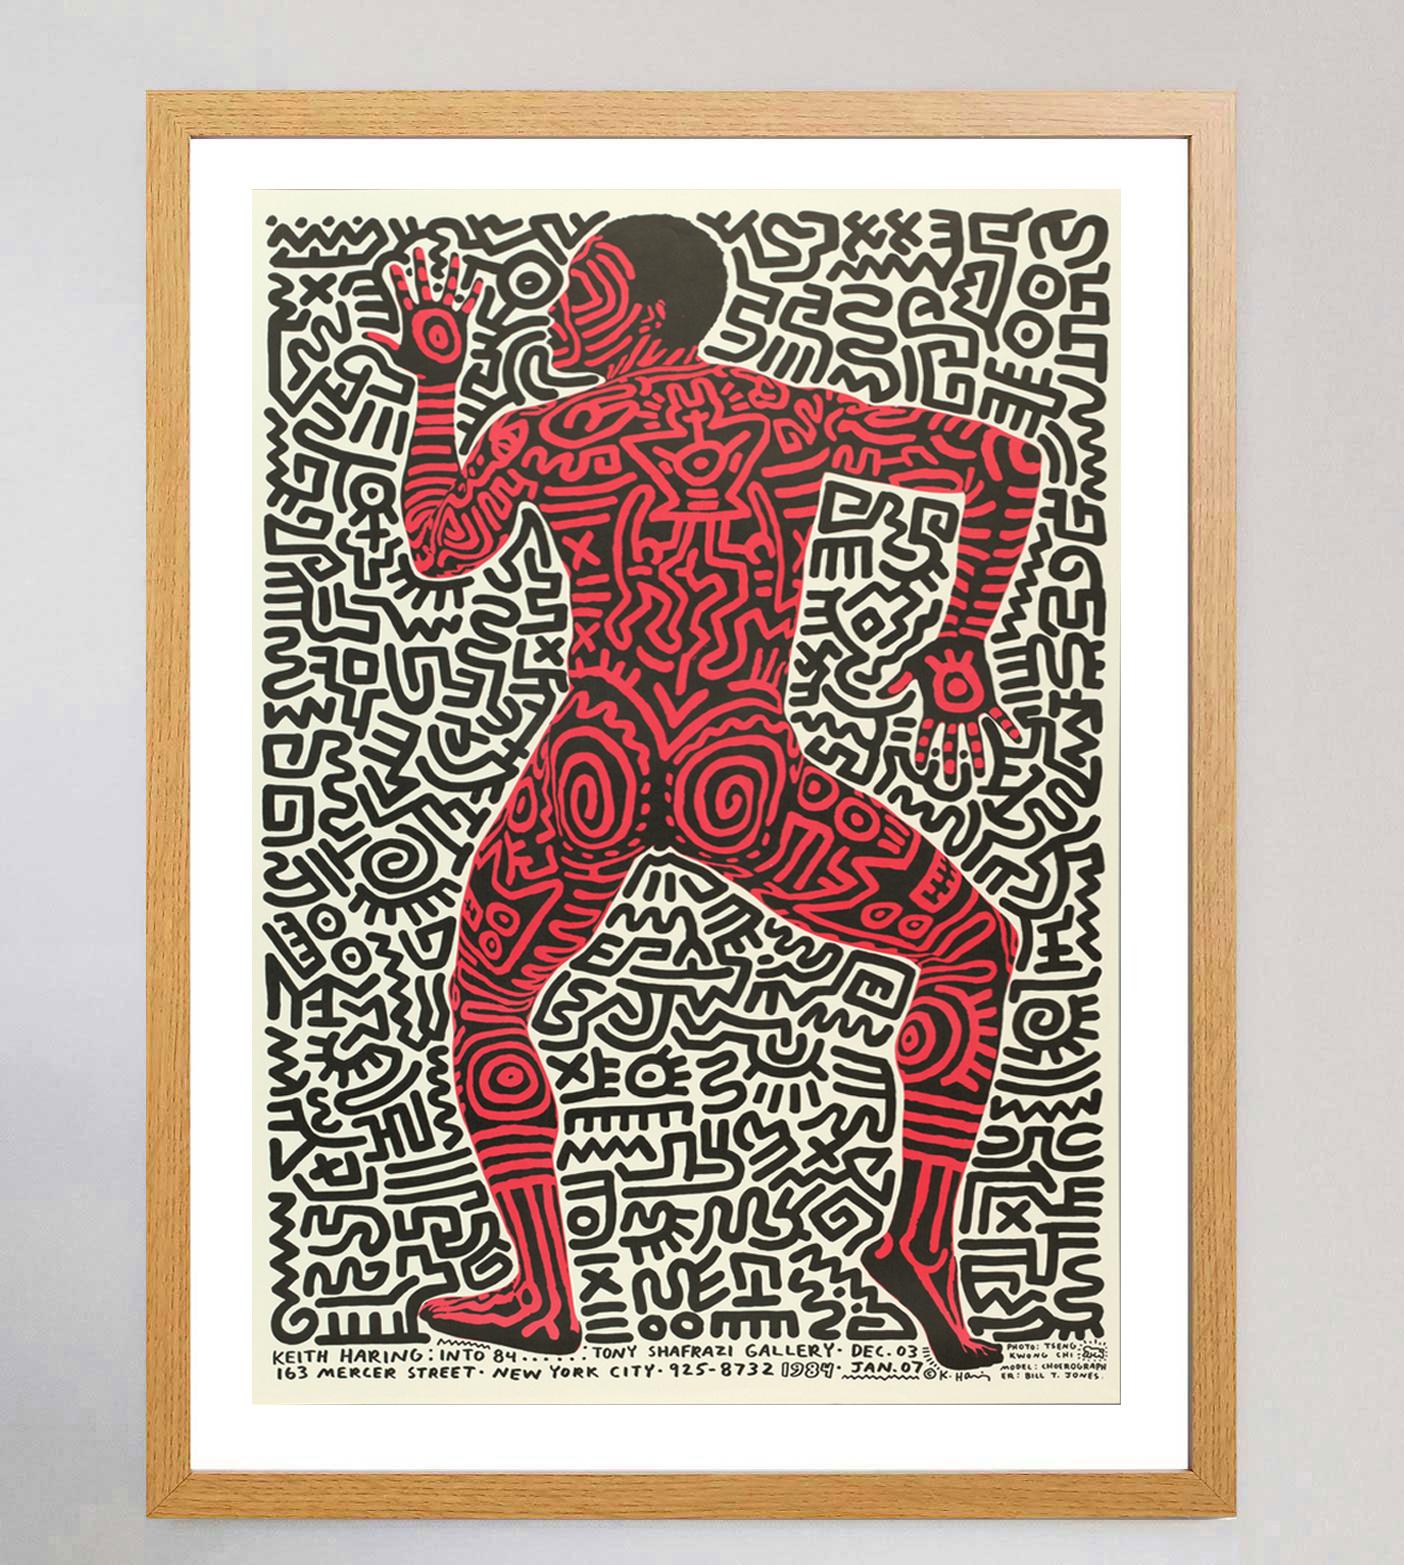 Américain 1983 Keith Haring, Into 84 Original Vintage Poster